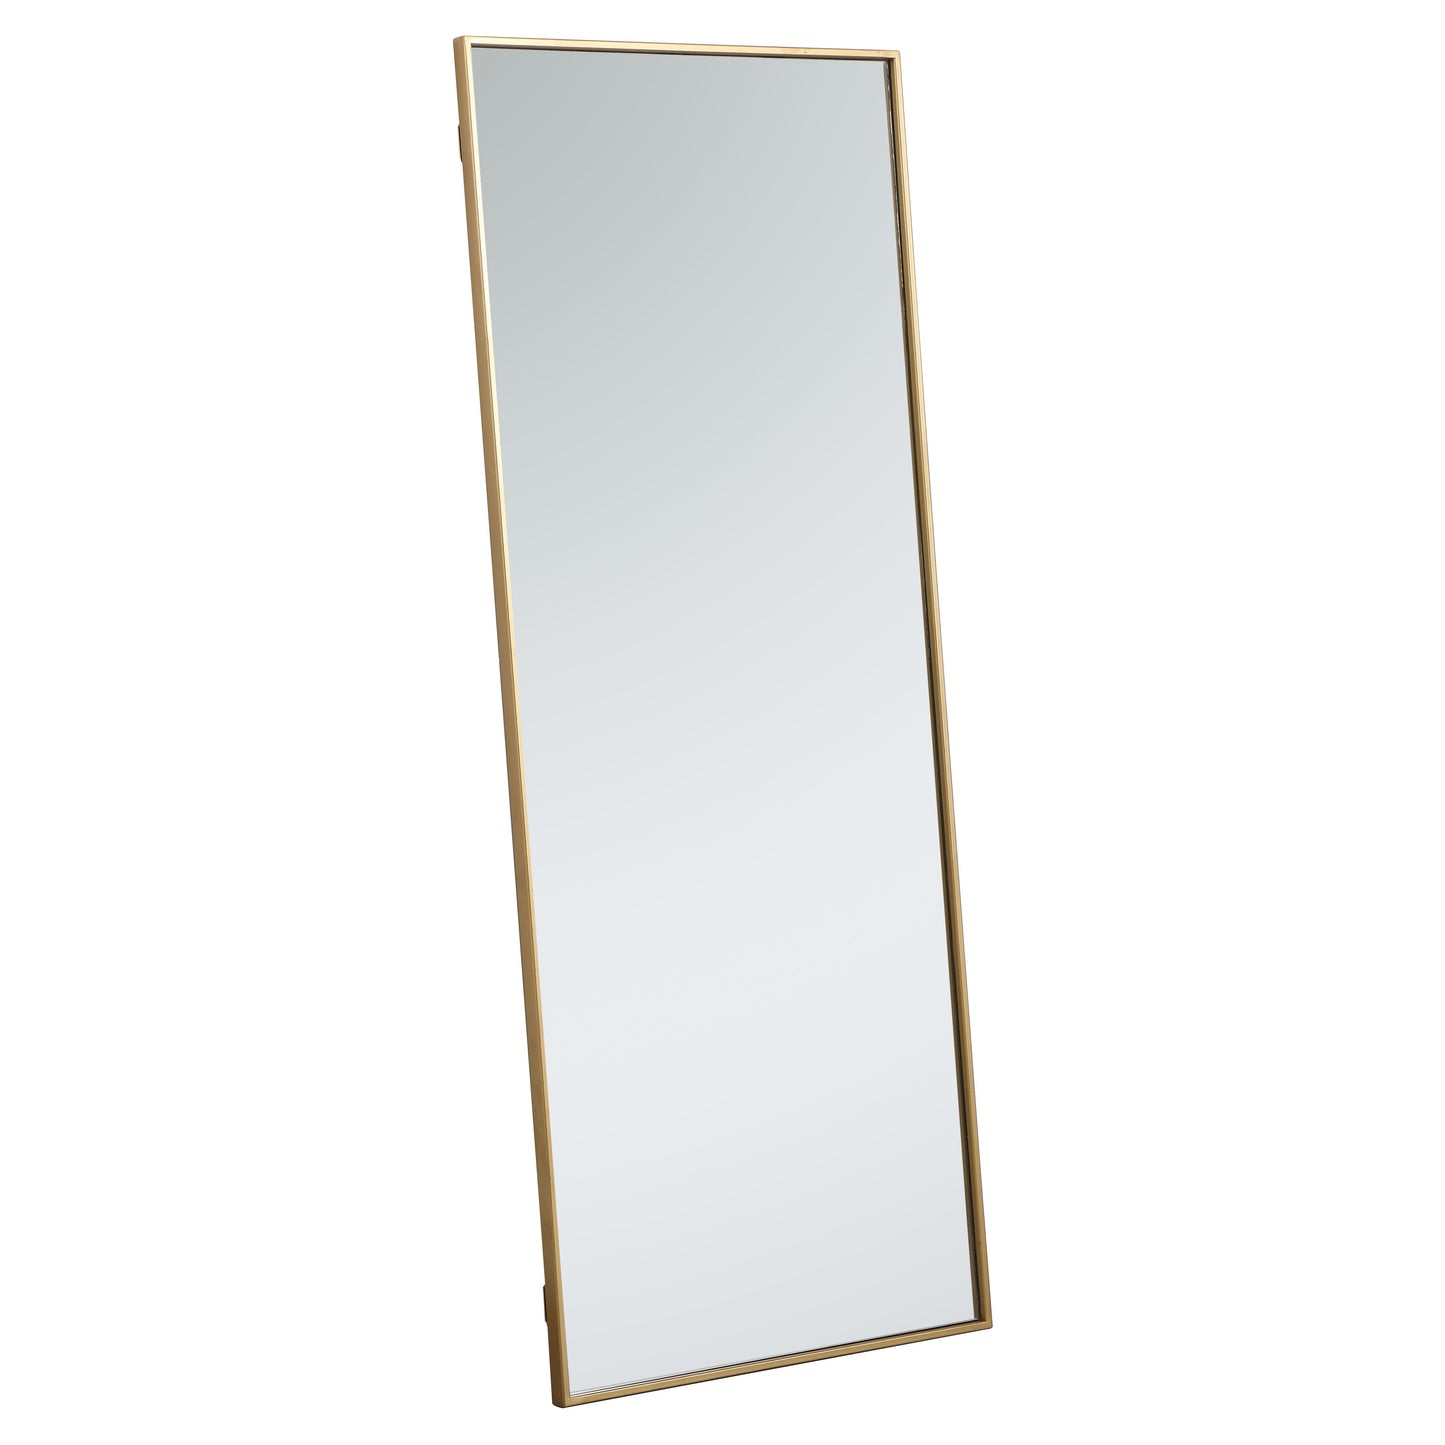 MR42460BR Monet 24" x 60" Metal Framed Rectangular Mirror in Brass